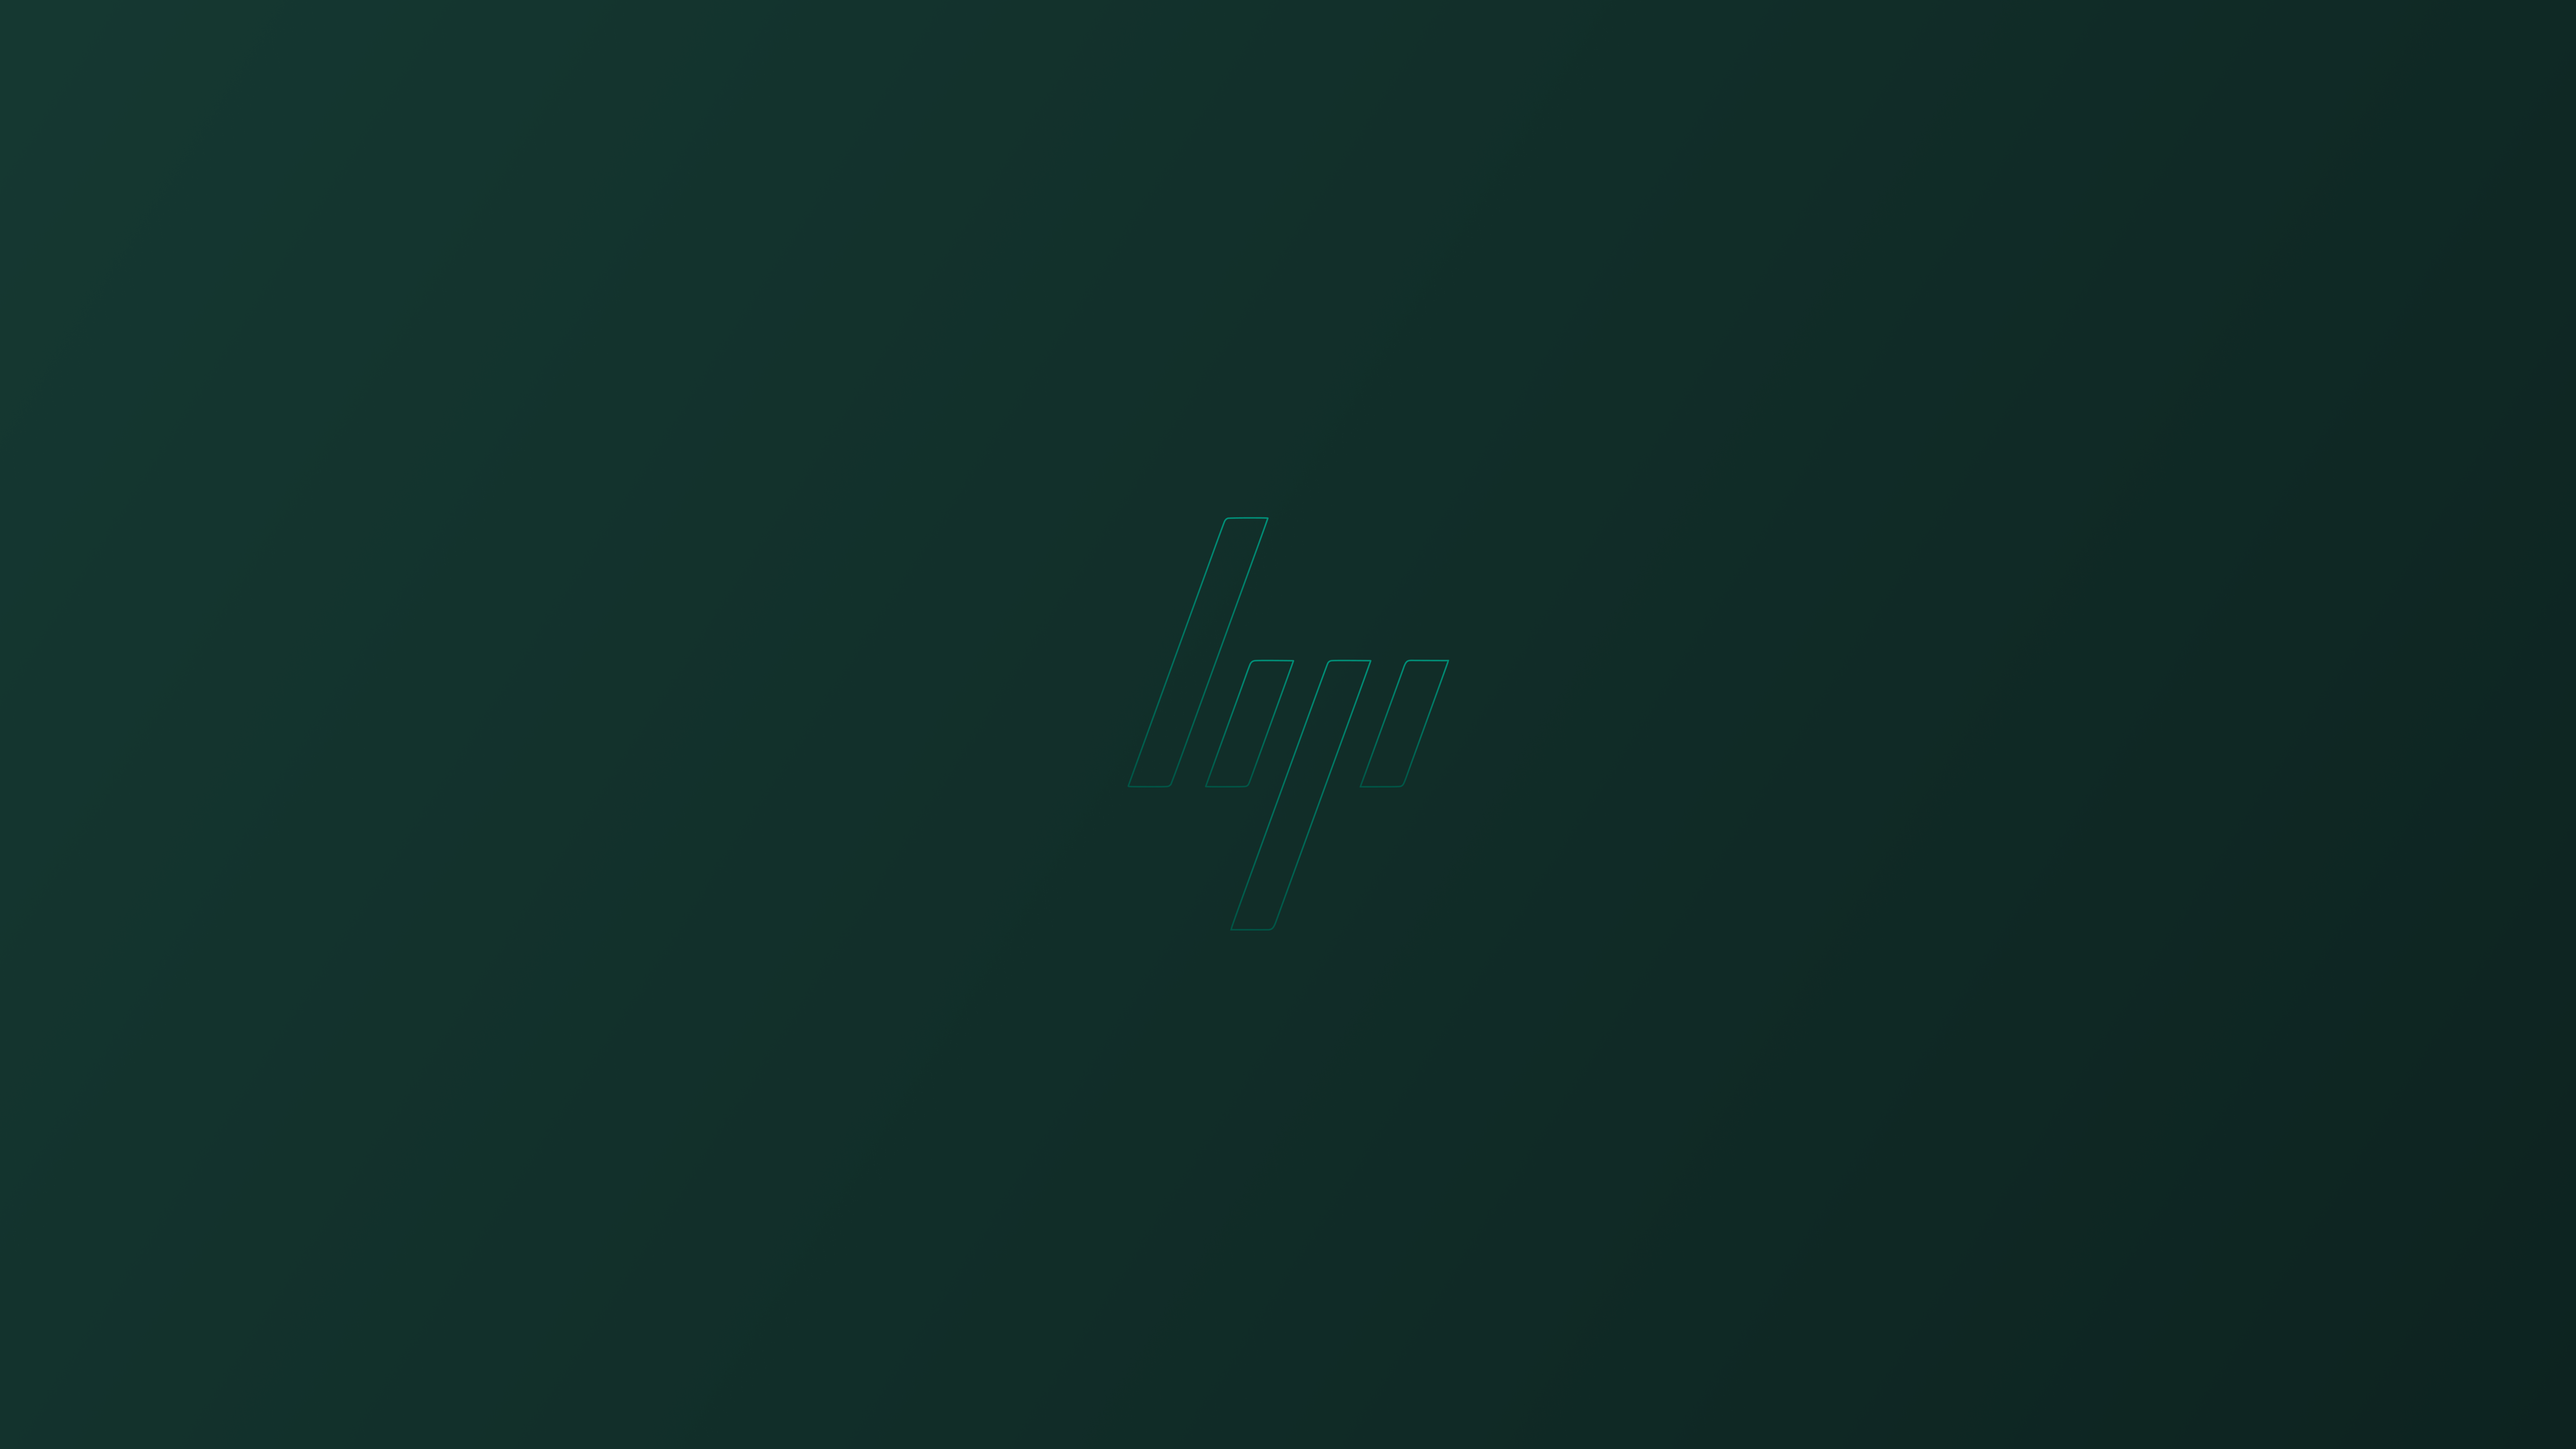 Minimalism Hewlett Packard Brand Logo Green Background Digital Art Simple Background 7680x4320